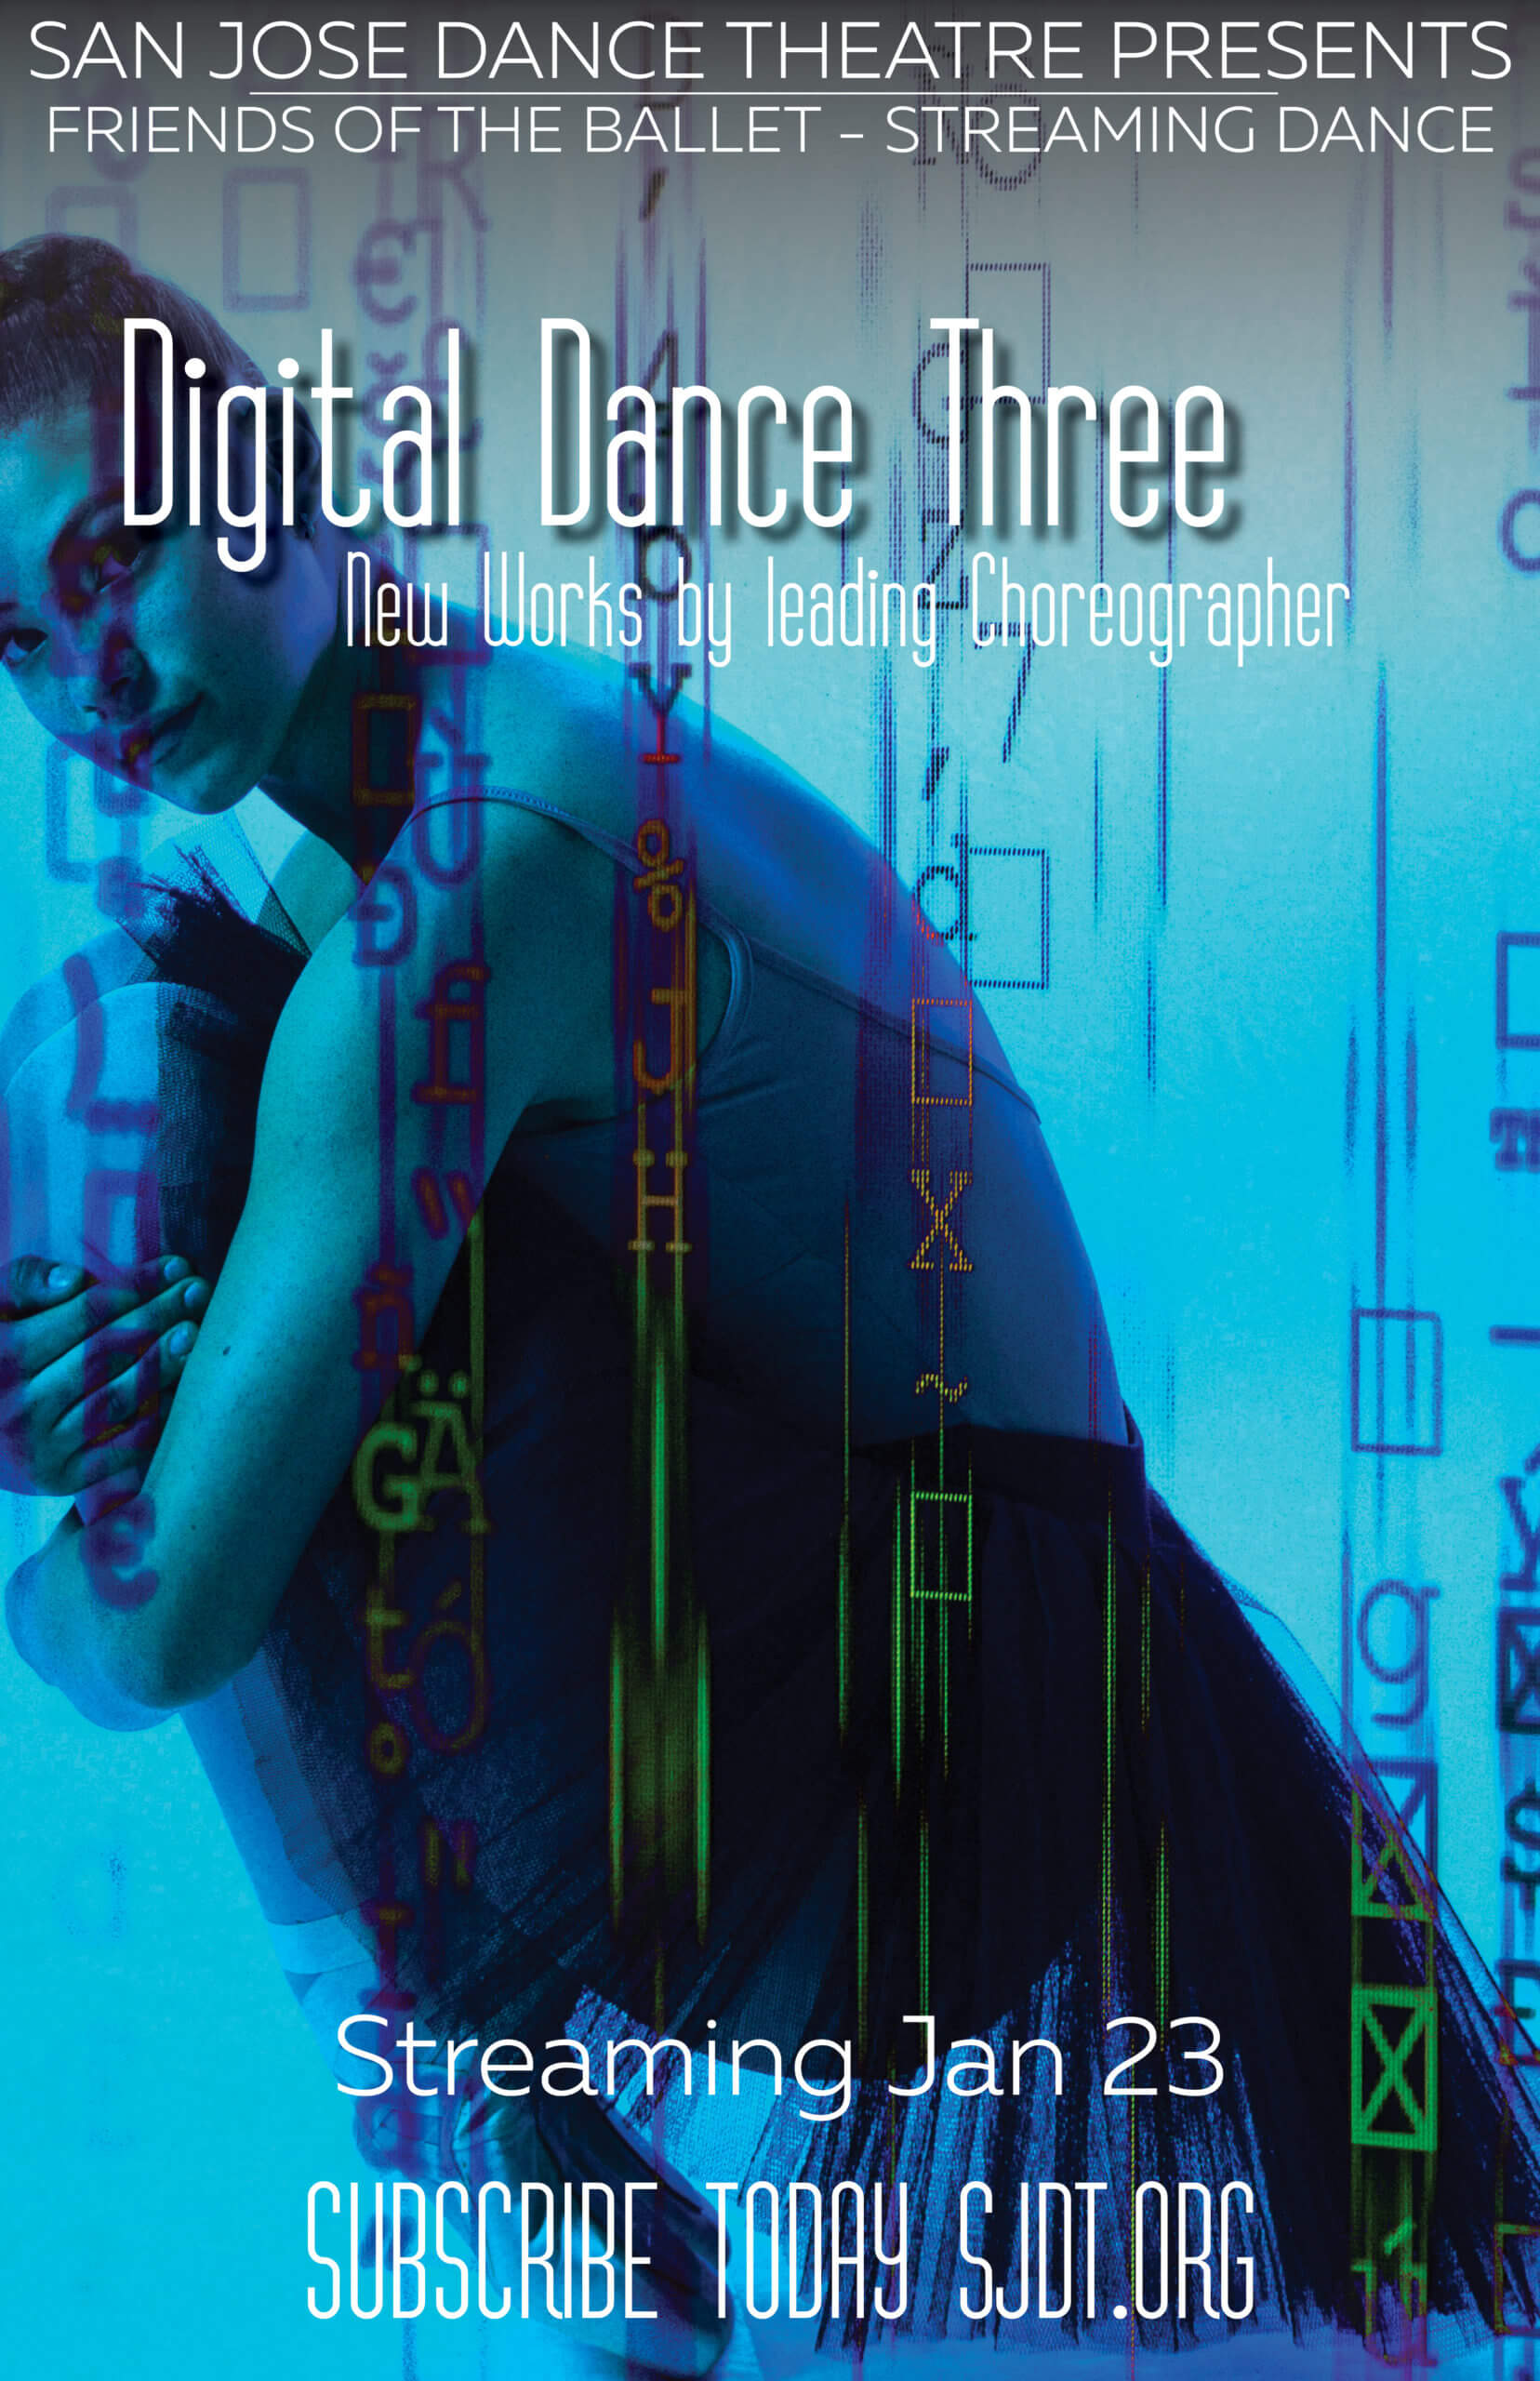 Digital Dance Three digital stream friends of ballet